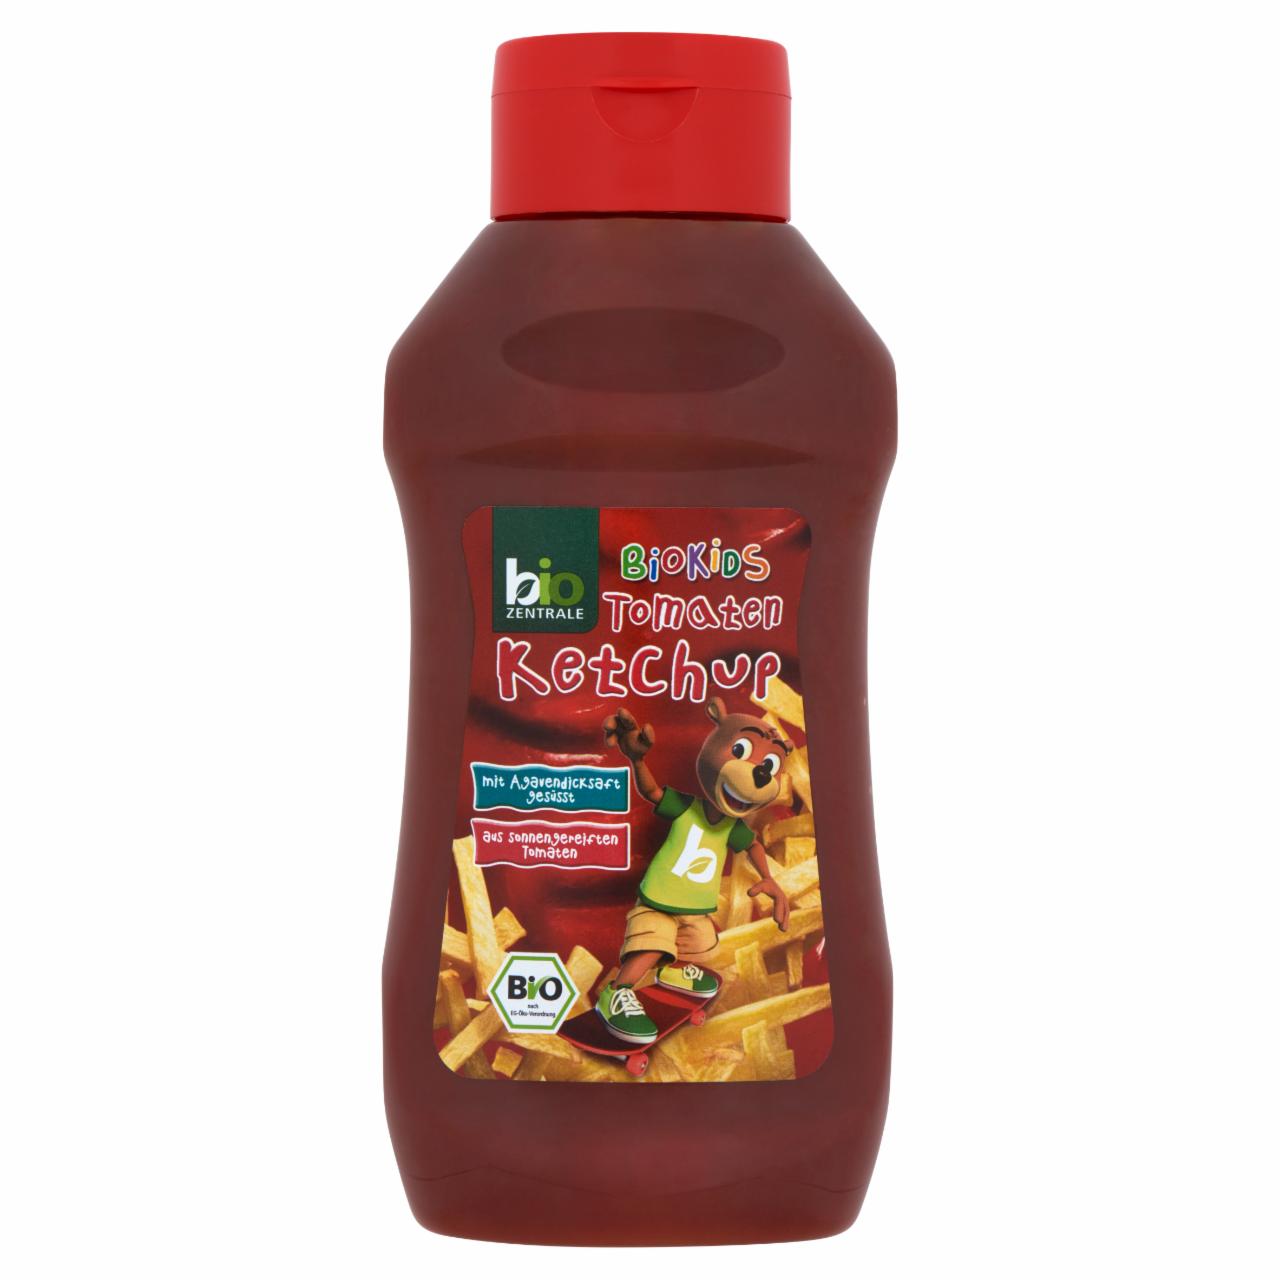 Képek - Bio Zentrale Biokids BIO ketchup 500 ml